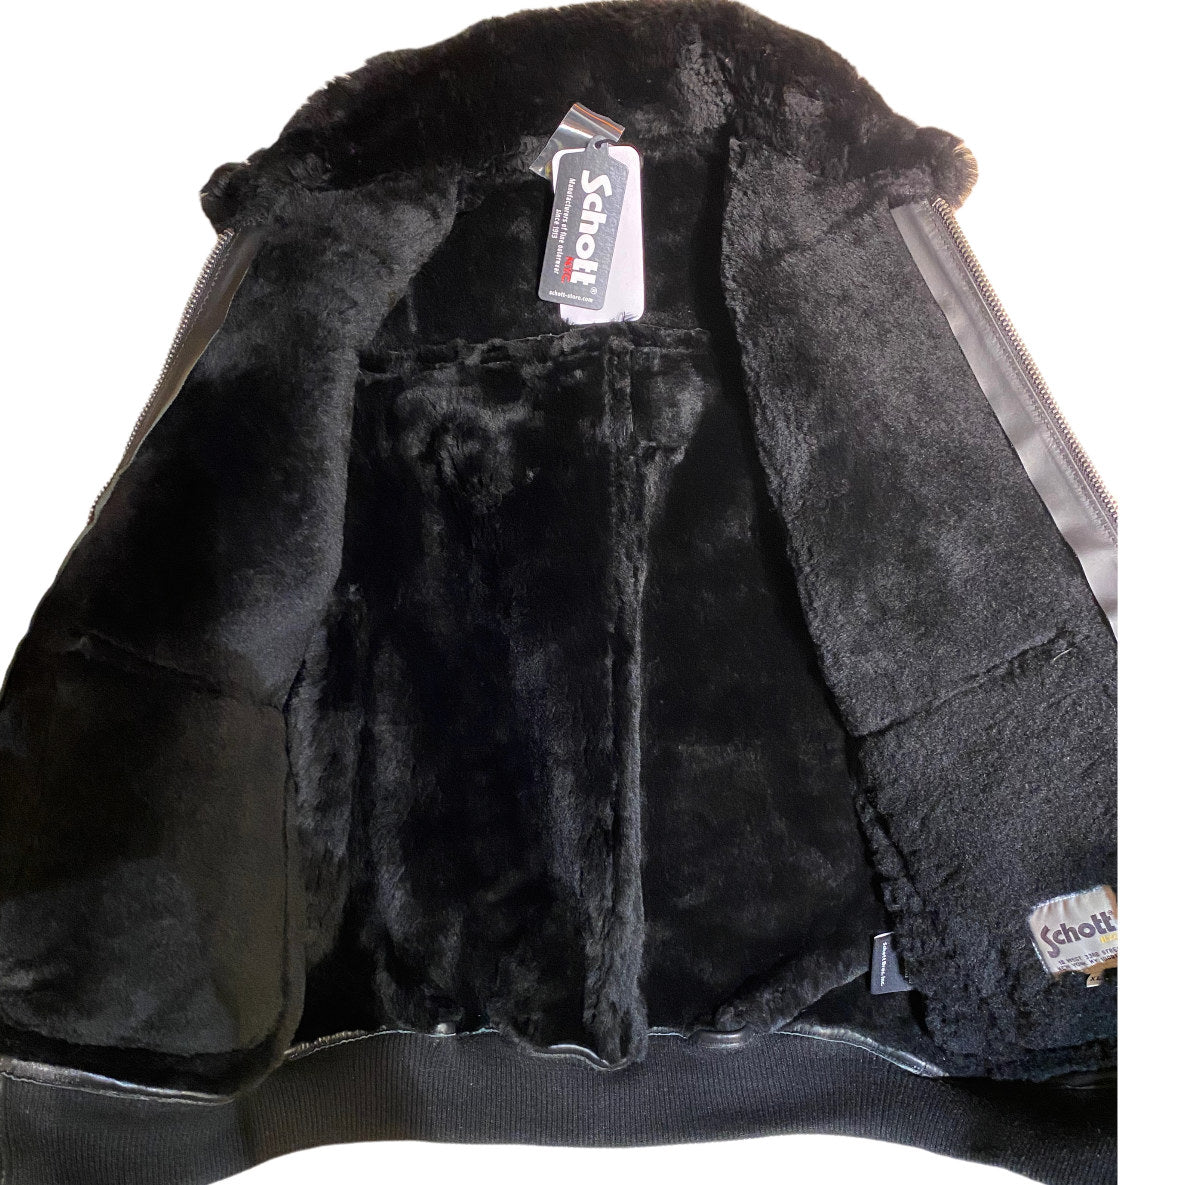 A-2 Sheepskin flight jacket - All Black